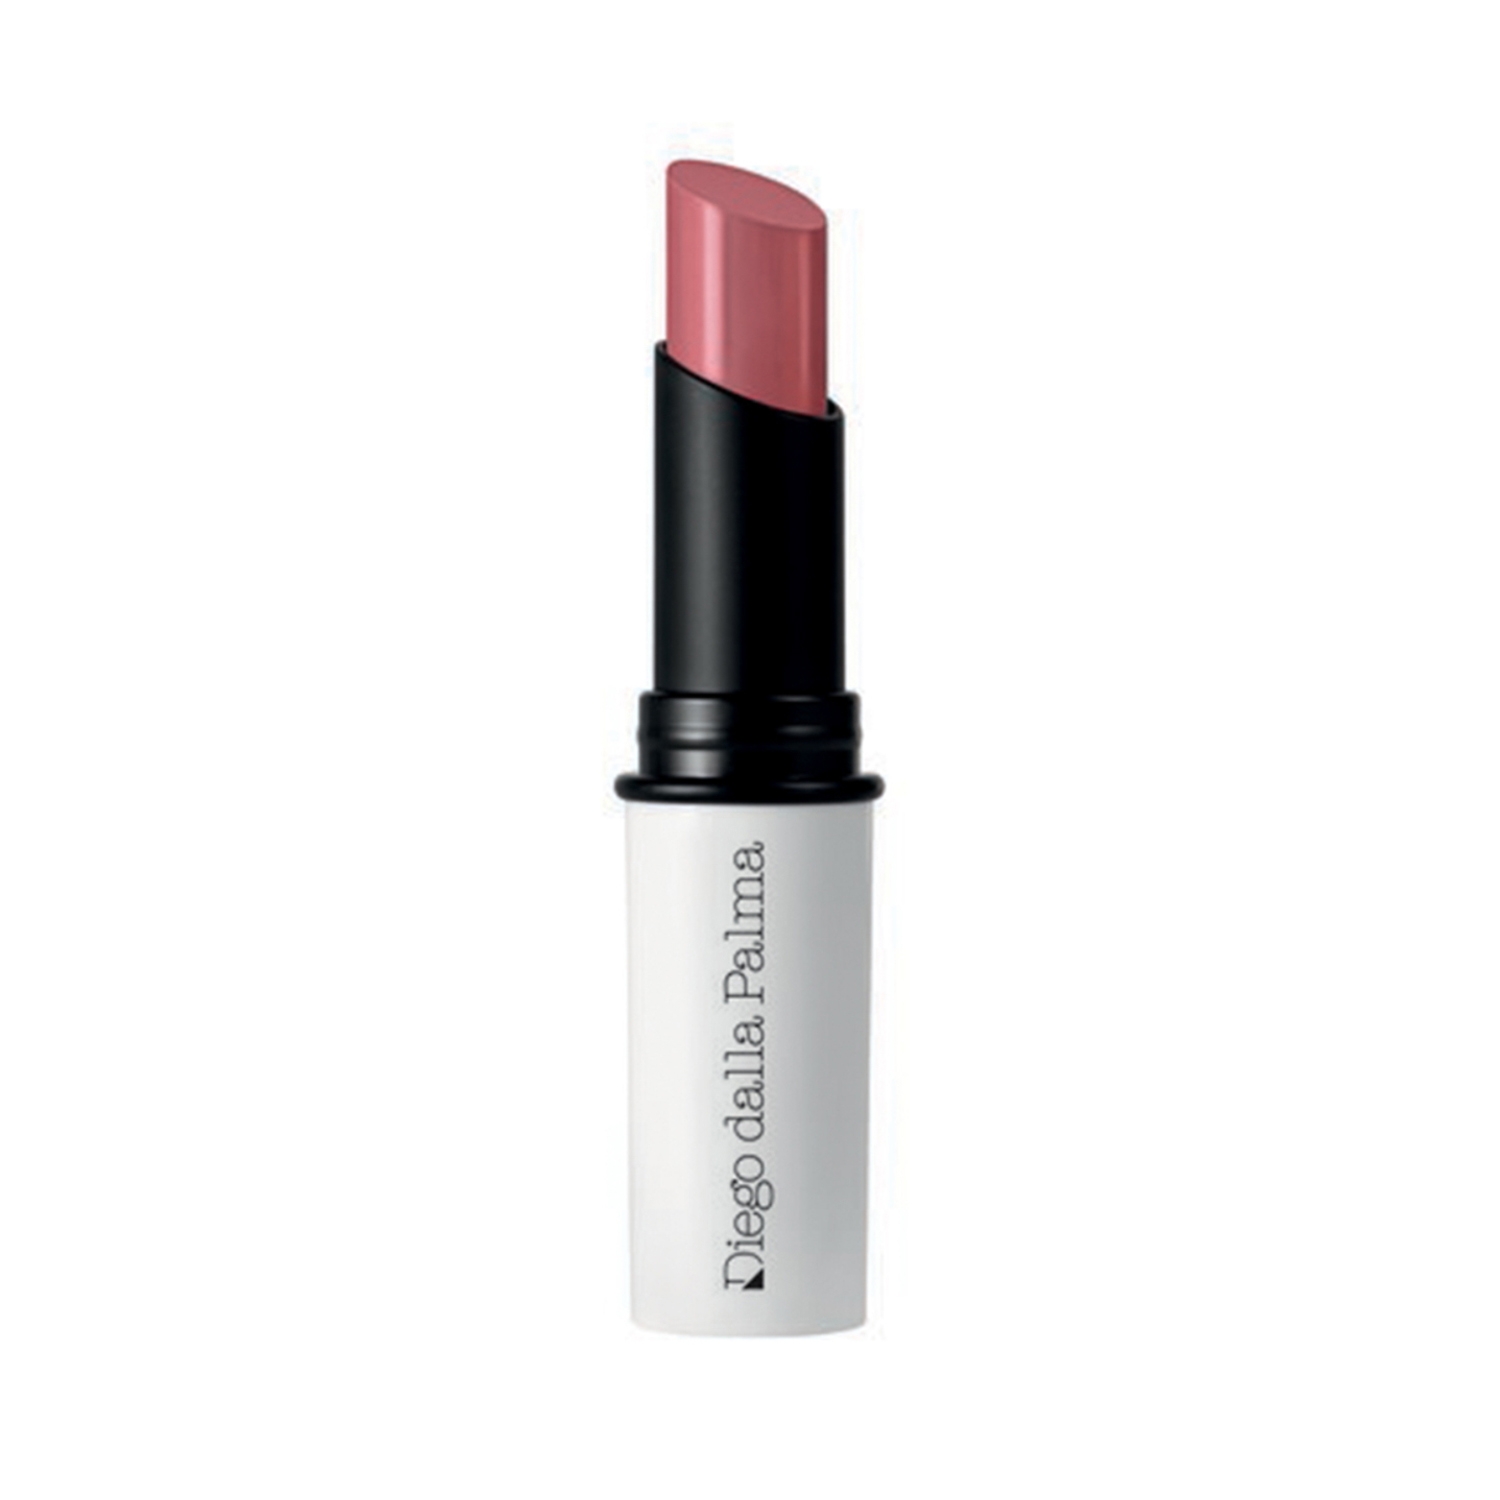 Diego Dalla Palma Milano | Diego Dalla Palma Milano Semitransparent Shiny Lipstick - 147 Antique Pink (2.5ml)